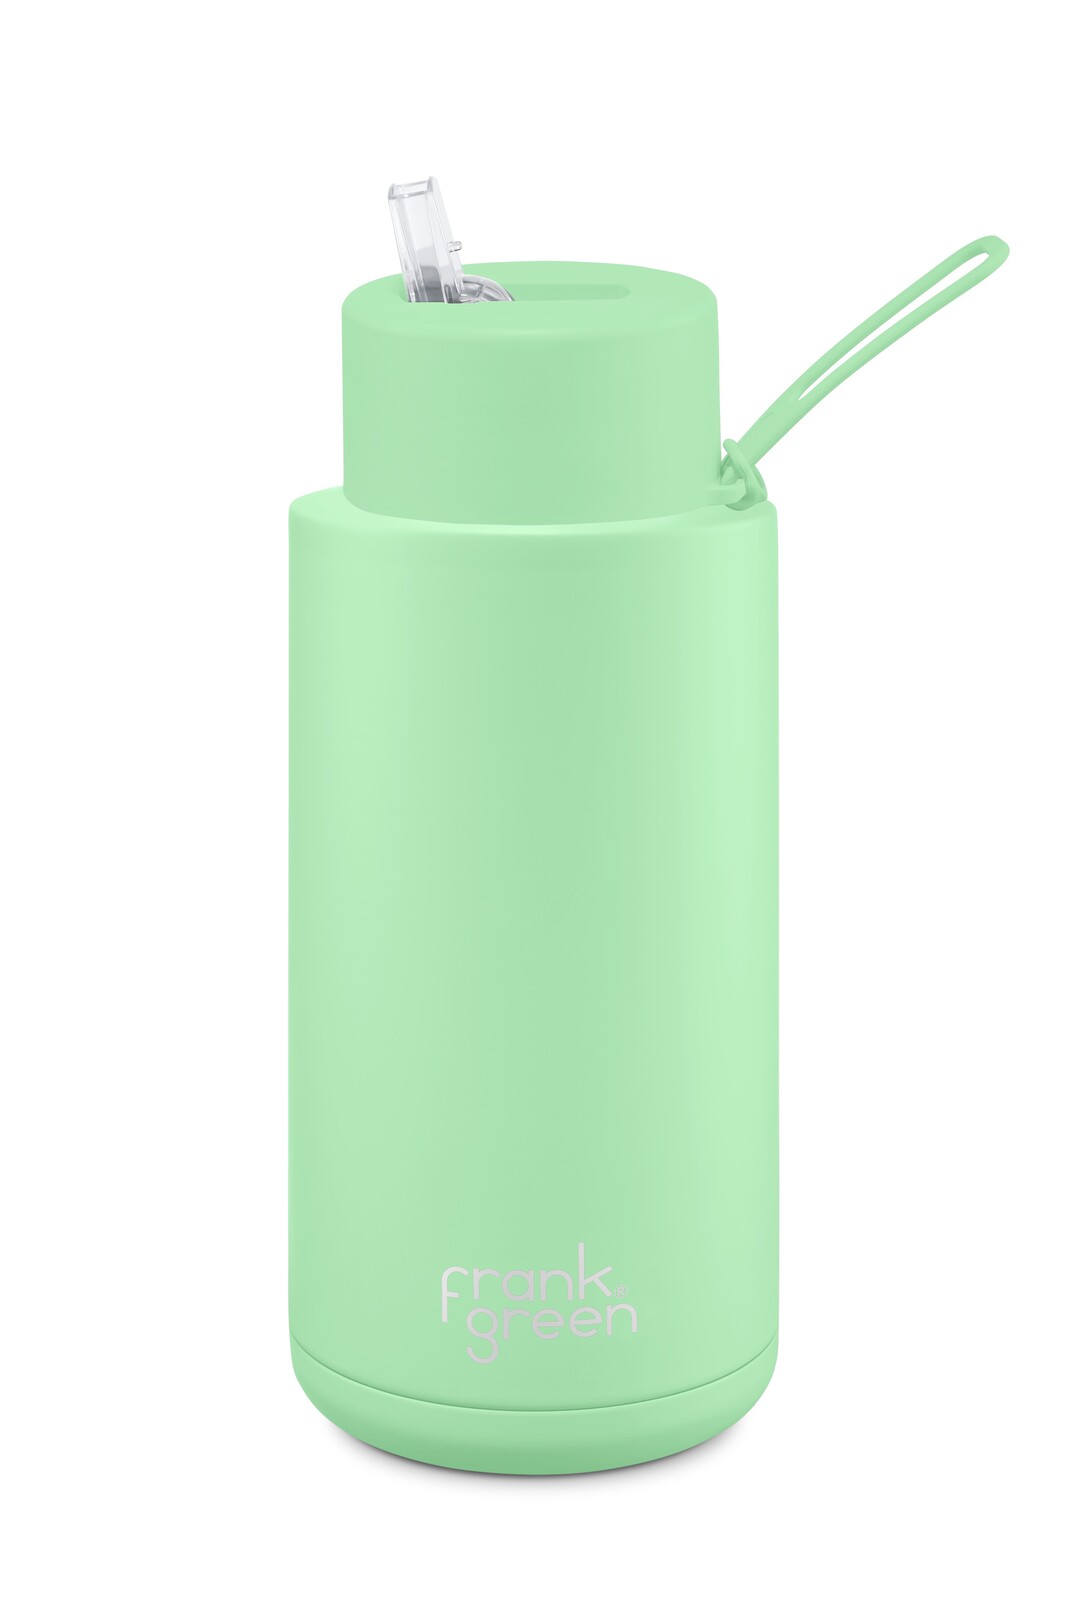 frank green Ceramic Reusable Bottle 1L - Straw Lid - Mint Gelato